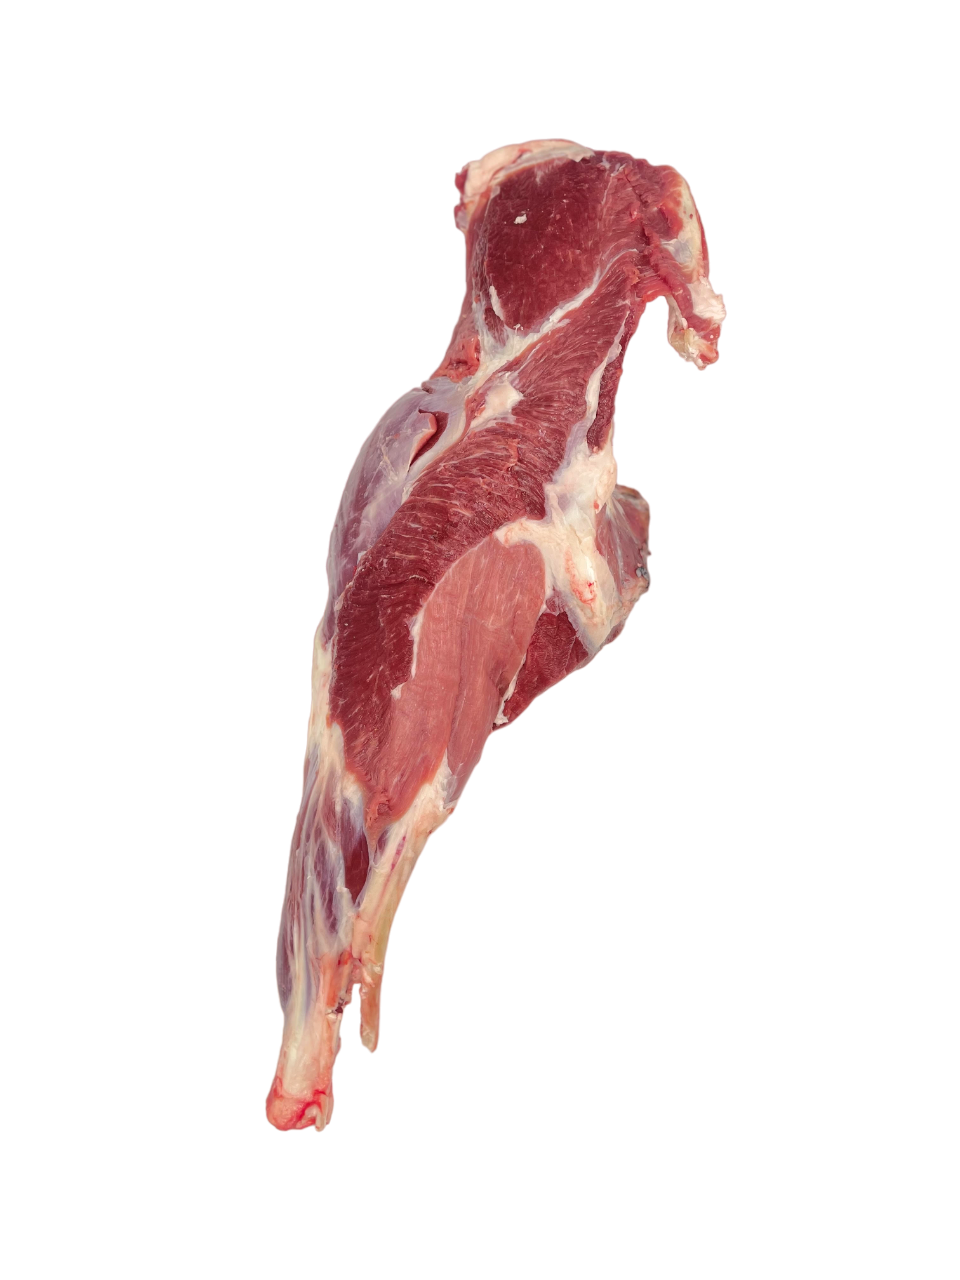 Halal Mutton Leg Without Fat